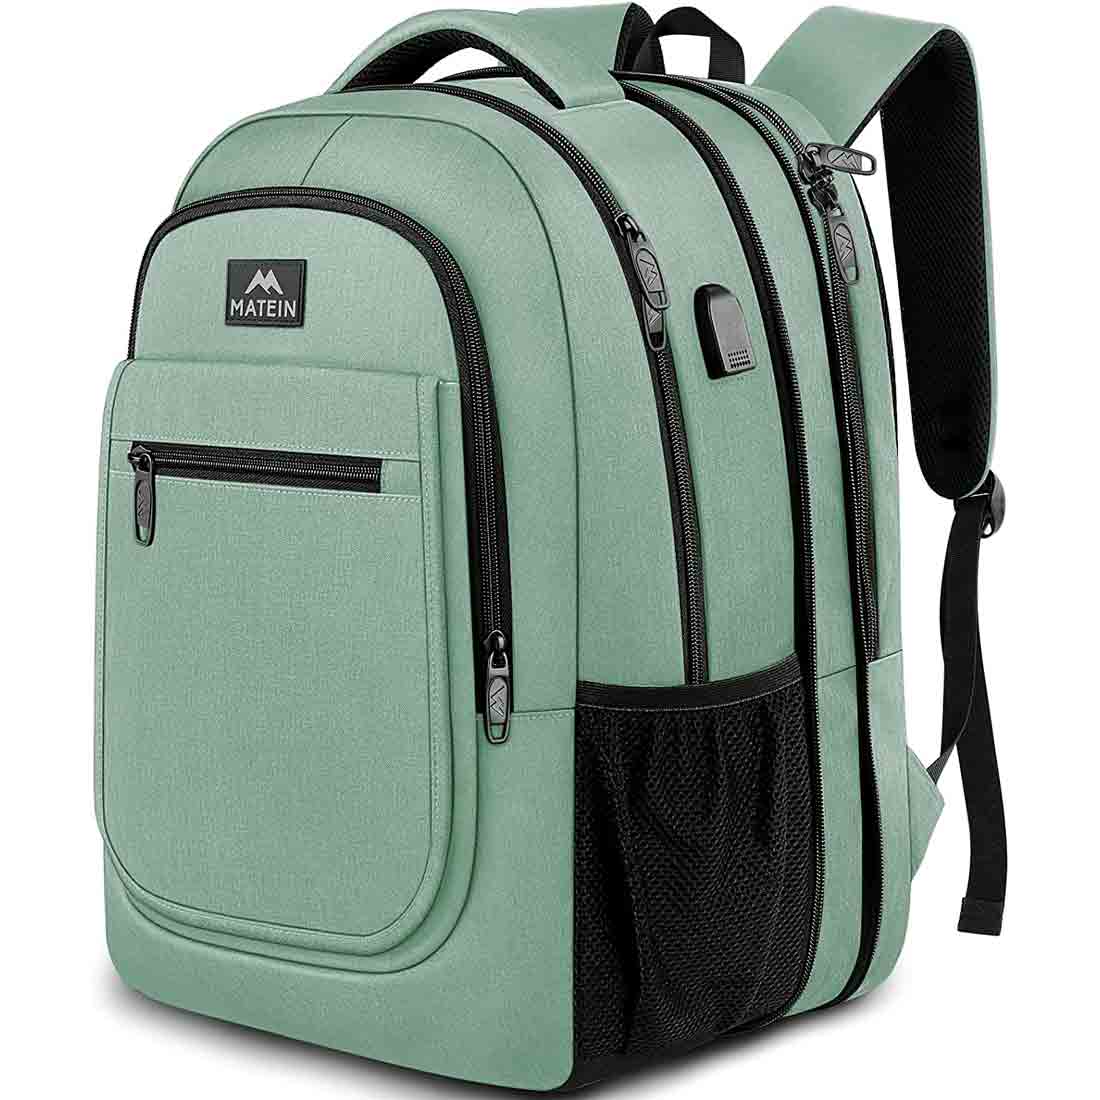 Matein Expandable College Bookbag Travel Laptop Backpack - travel laptop backpack